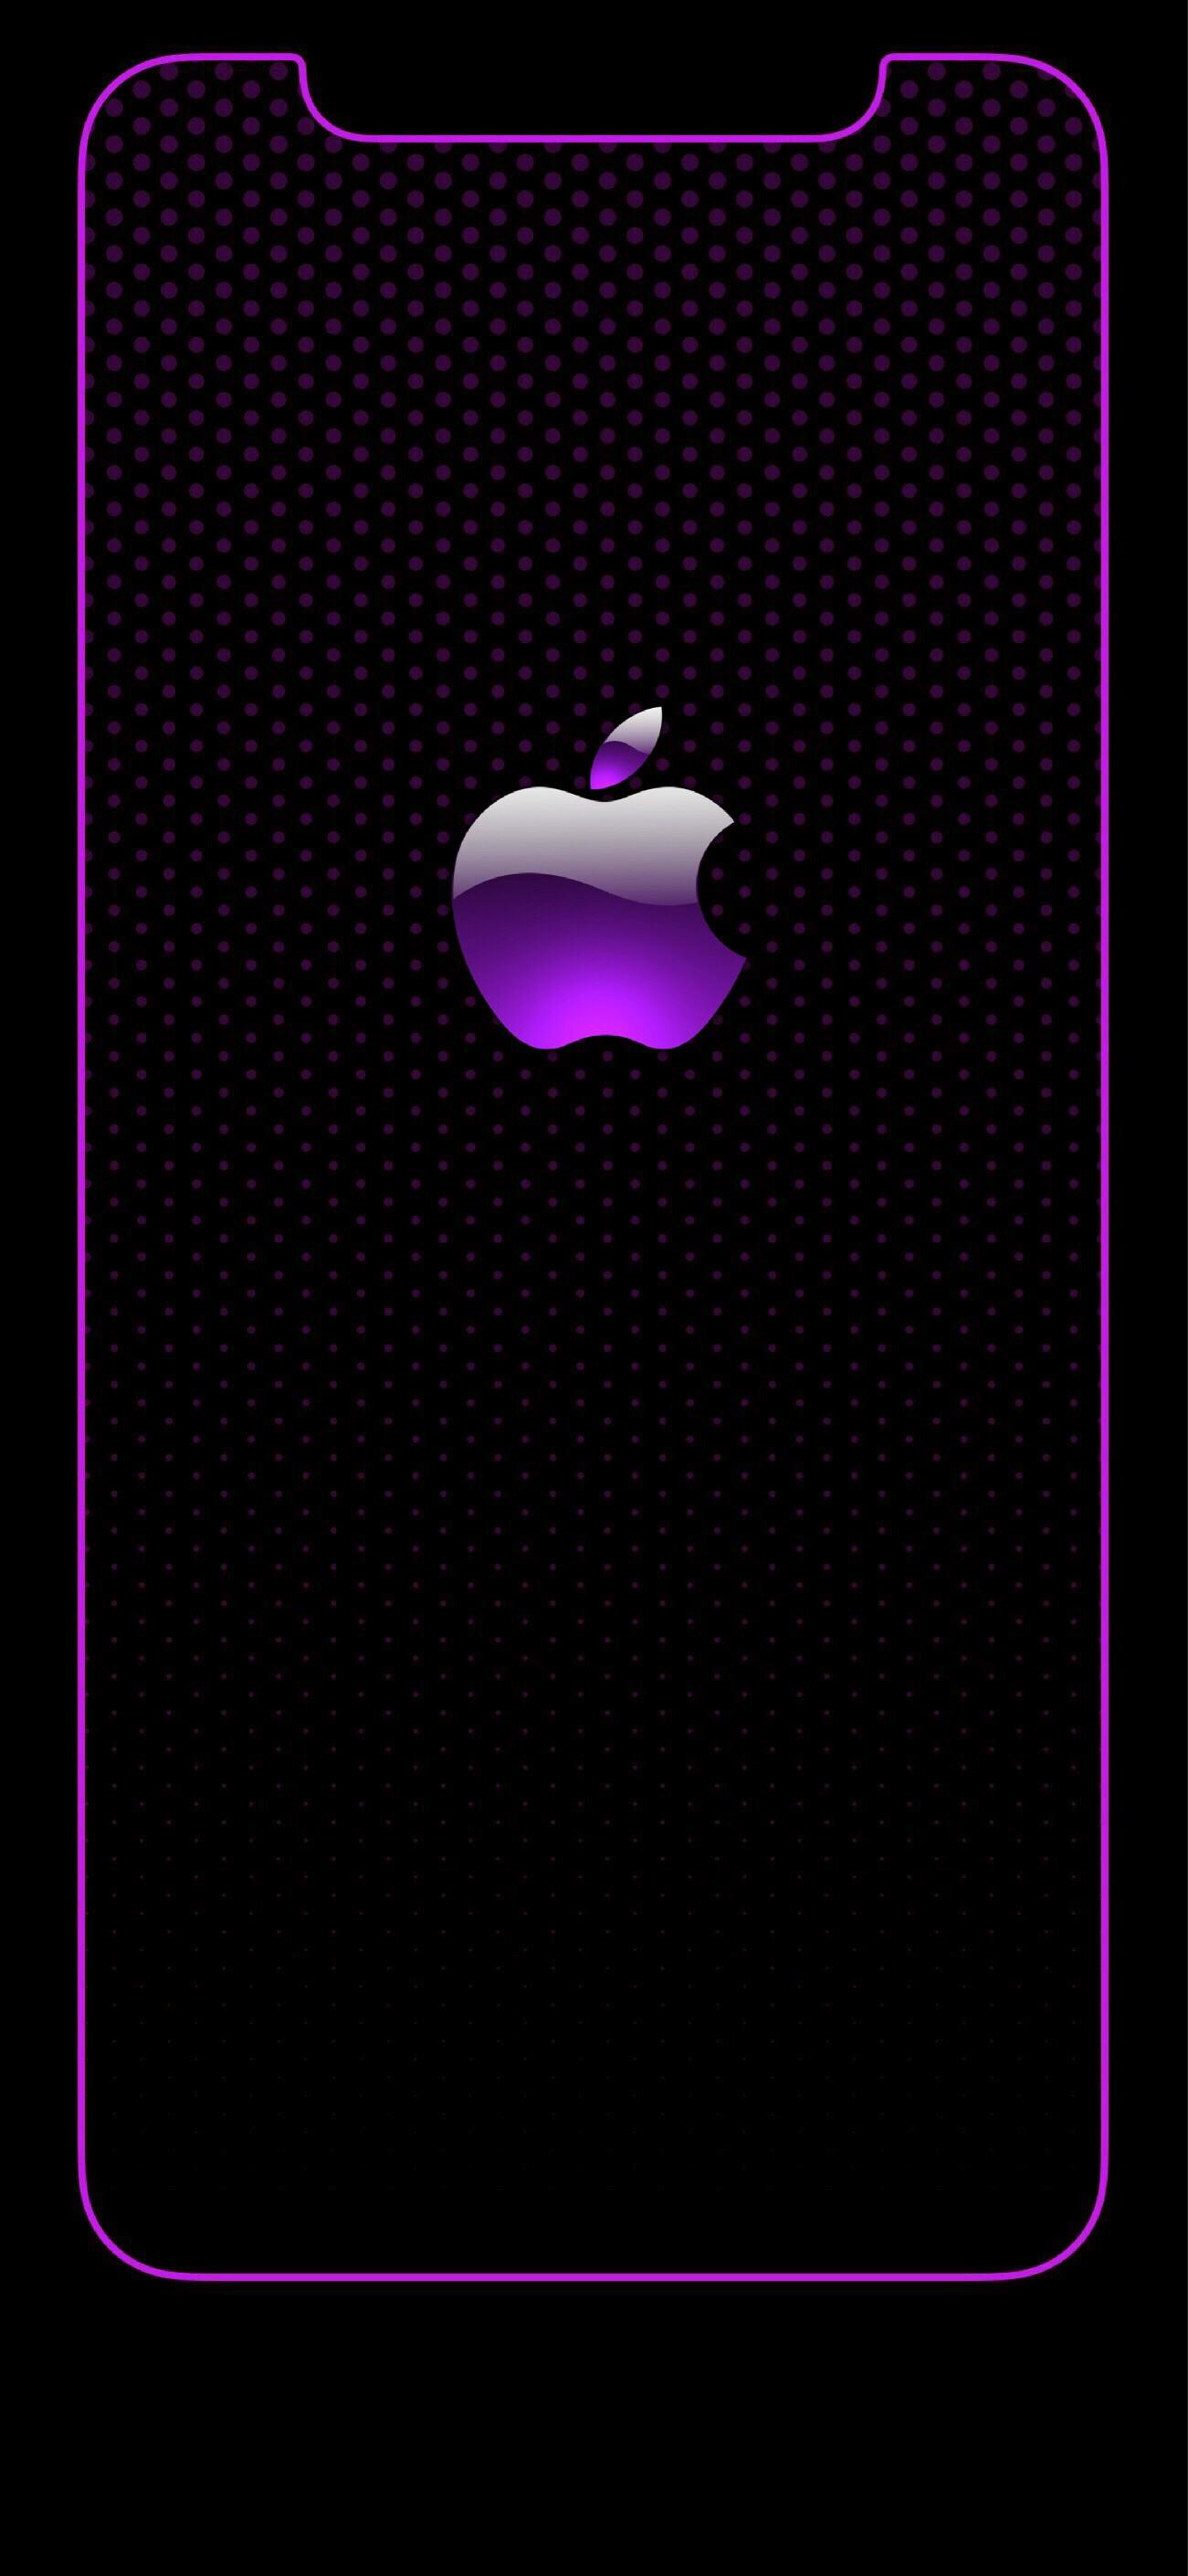 Again to orders, purple Apple. iPhone X Wallpaper X Wallpaper HD